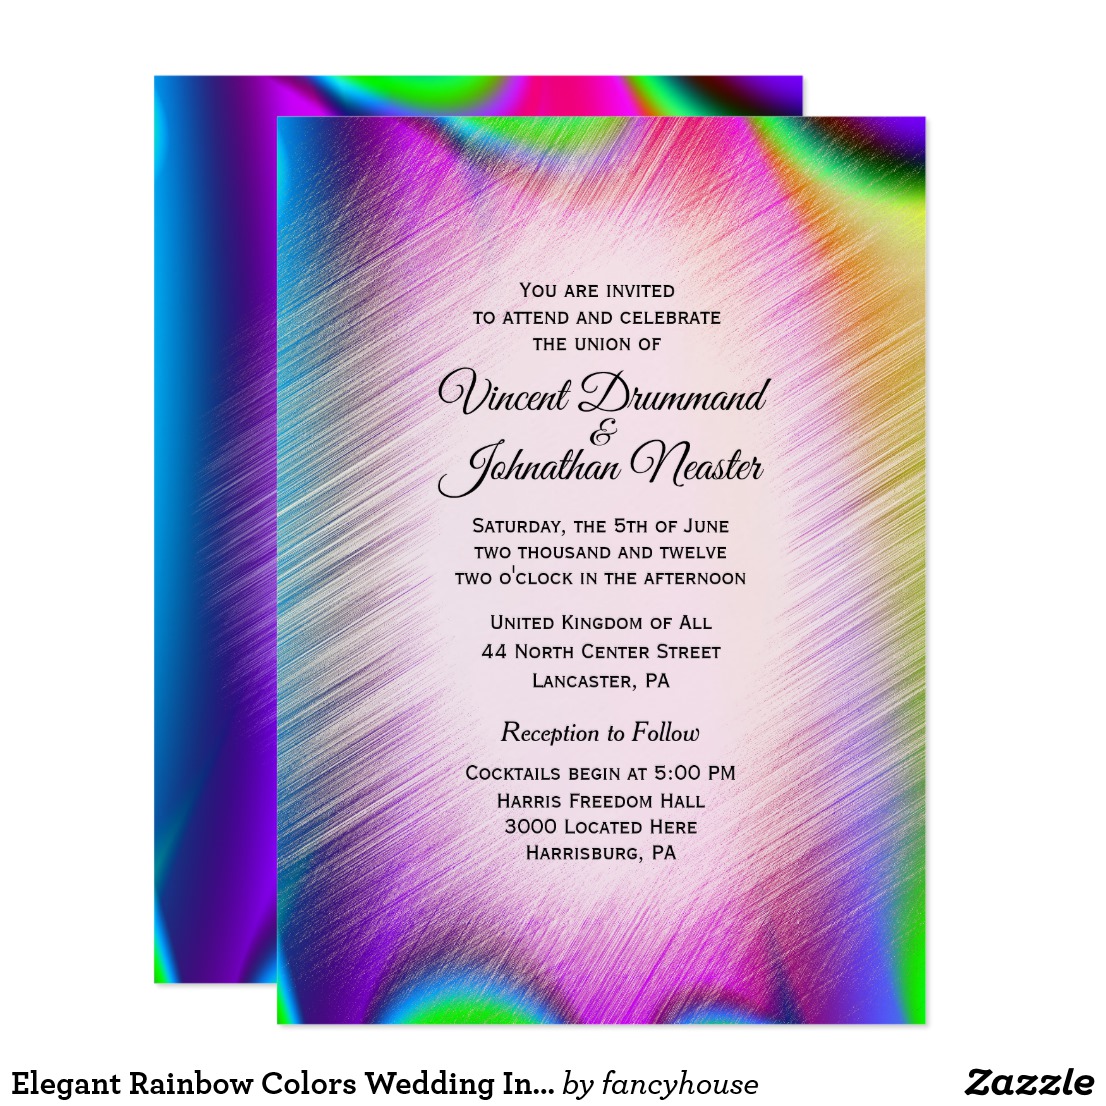 Elegant Rainbow Colors Wedding Invitations